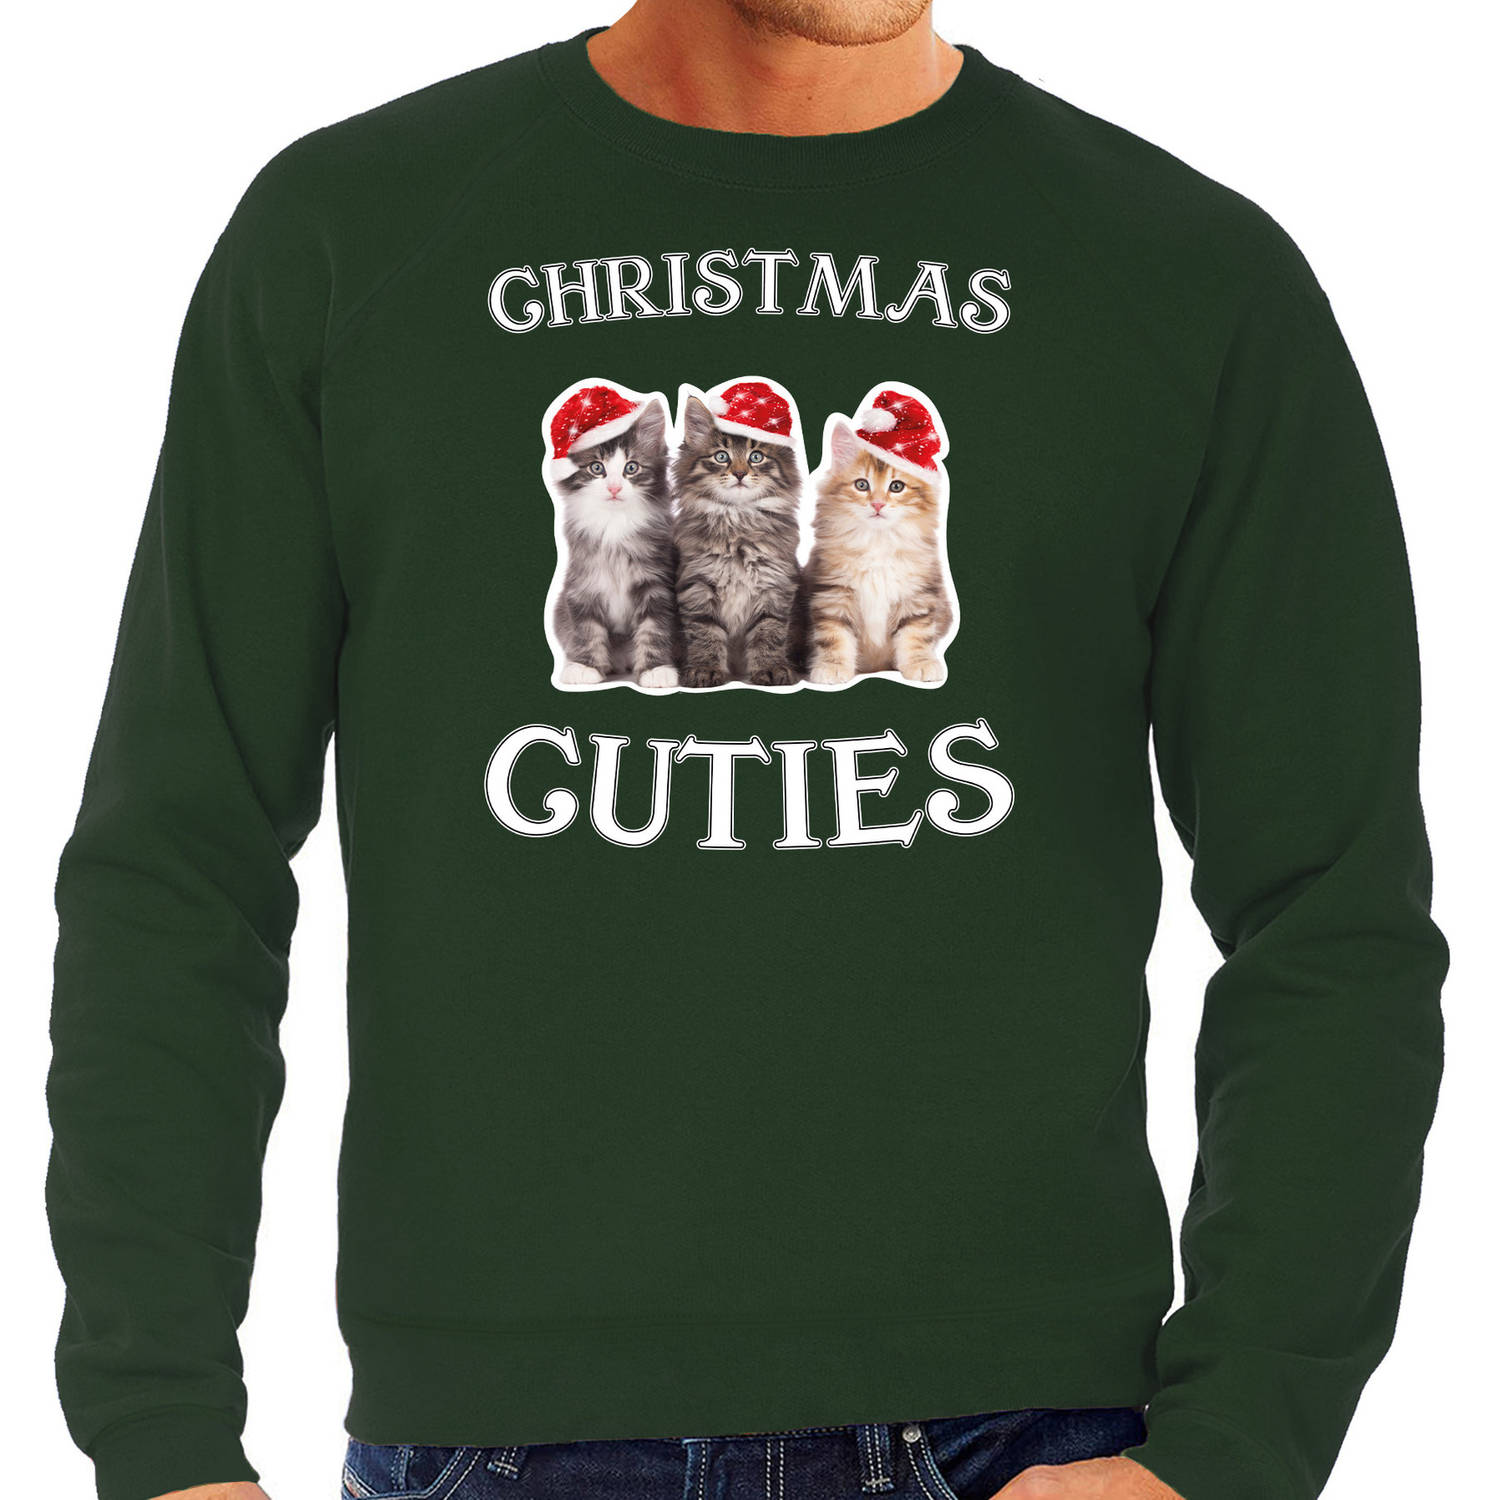 Groene Kersttrui / Kerstkleding Christmas cuties voor heren 2XL - kerst truien